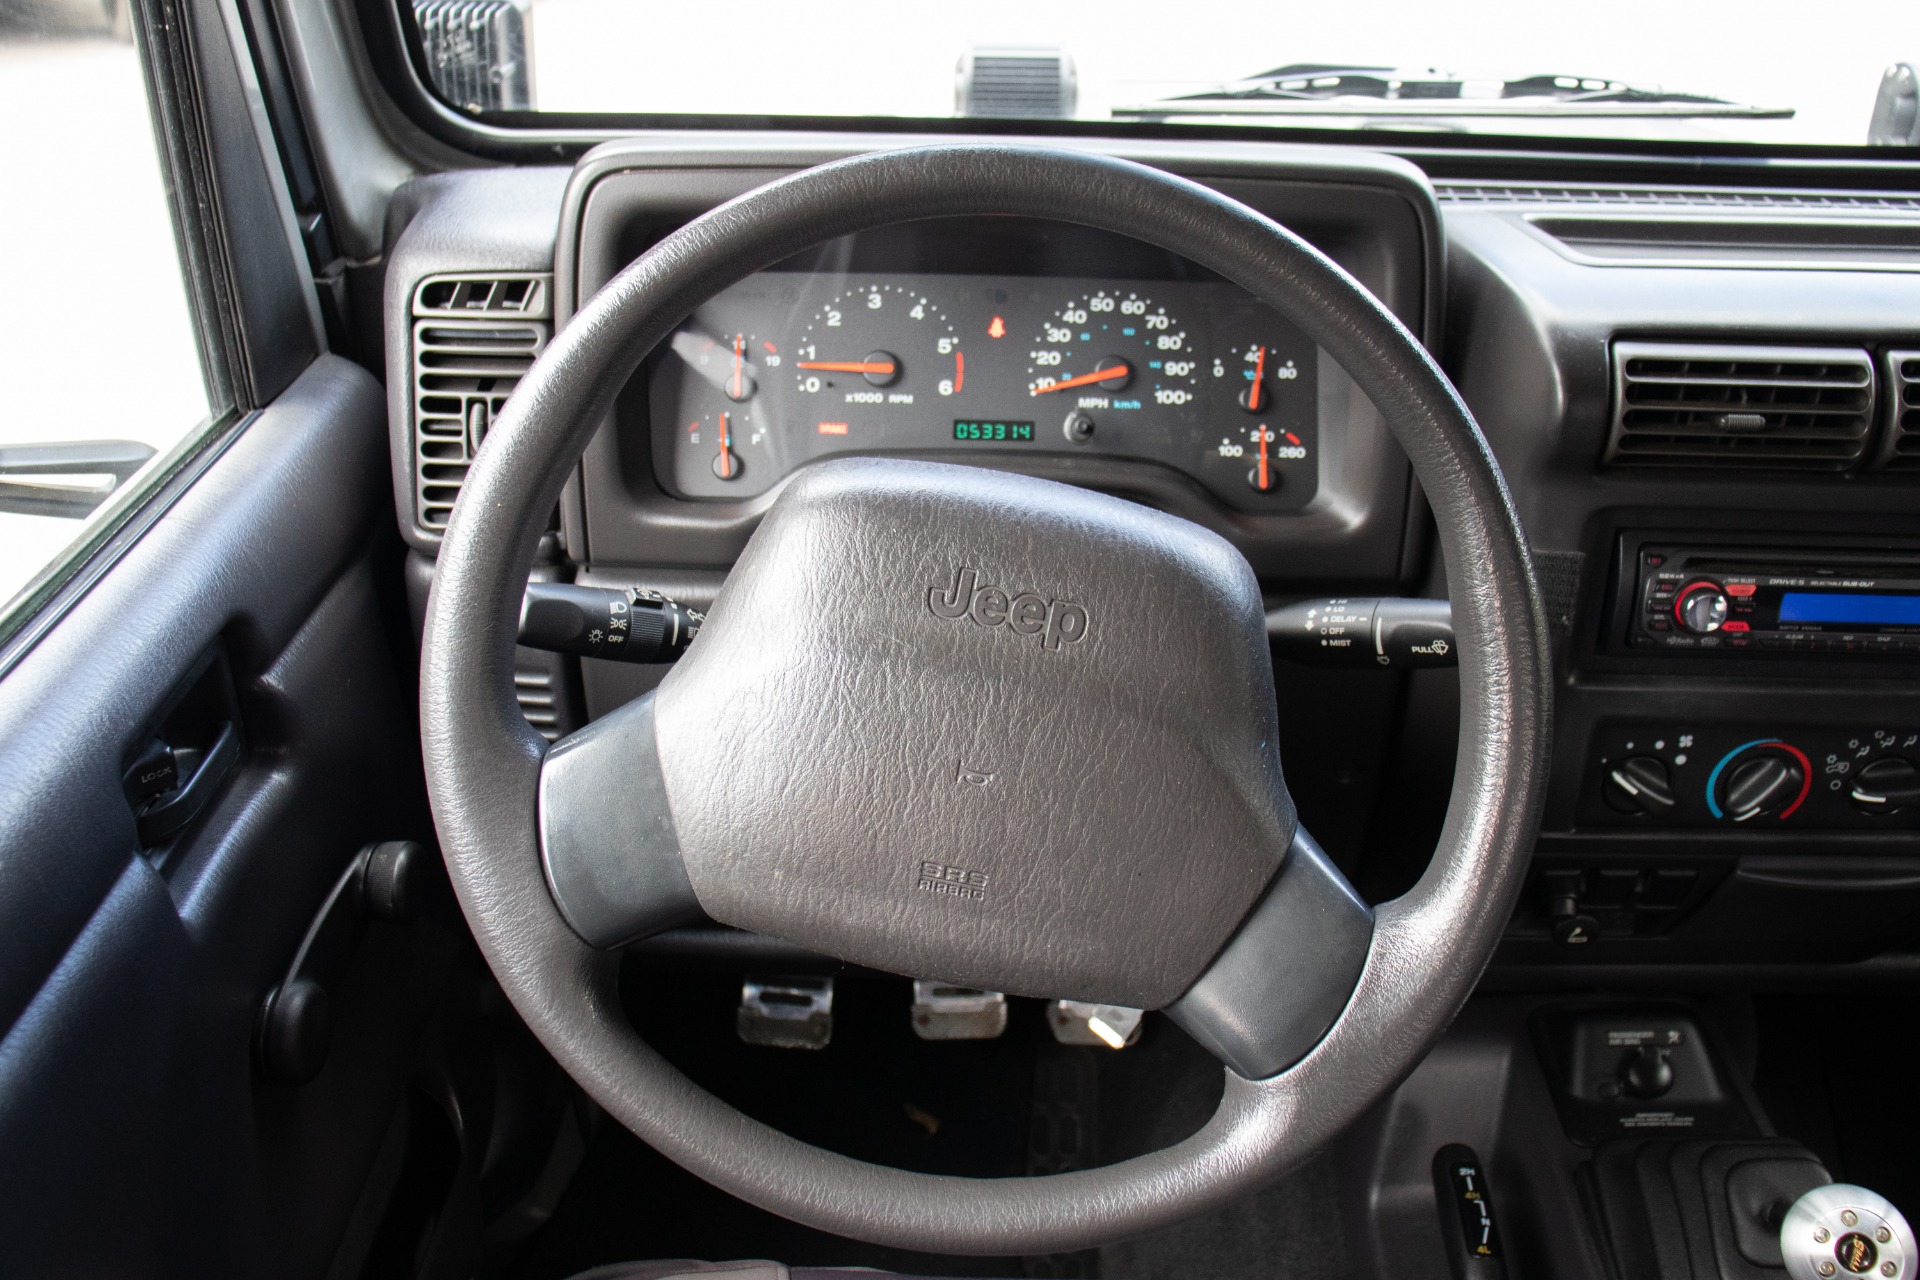 Used-2001-Jeep-Wrangler-SE